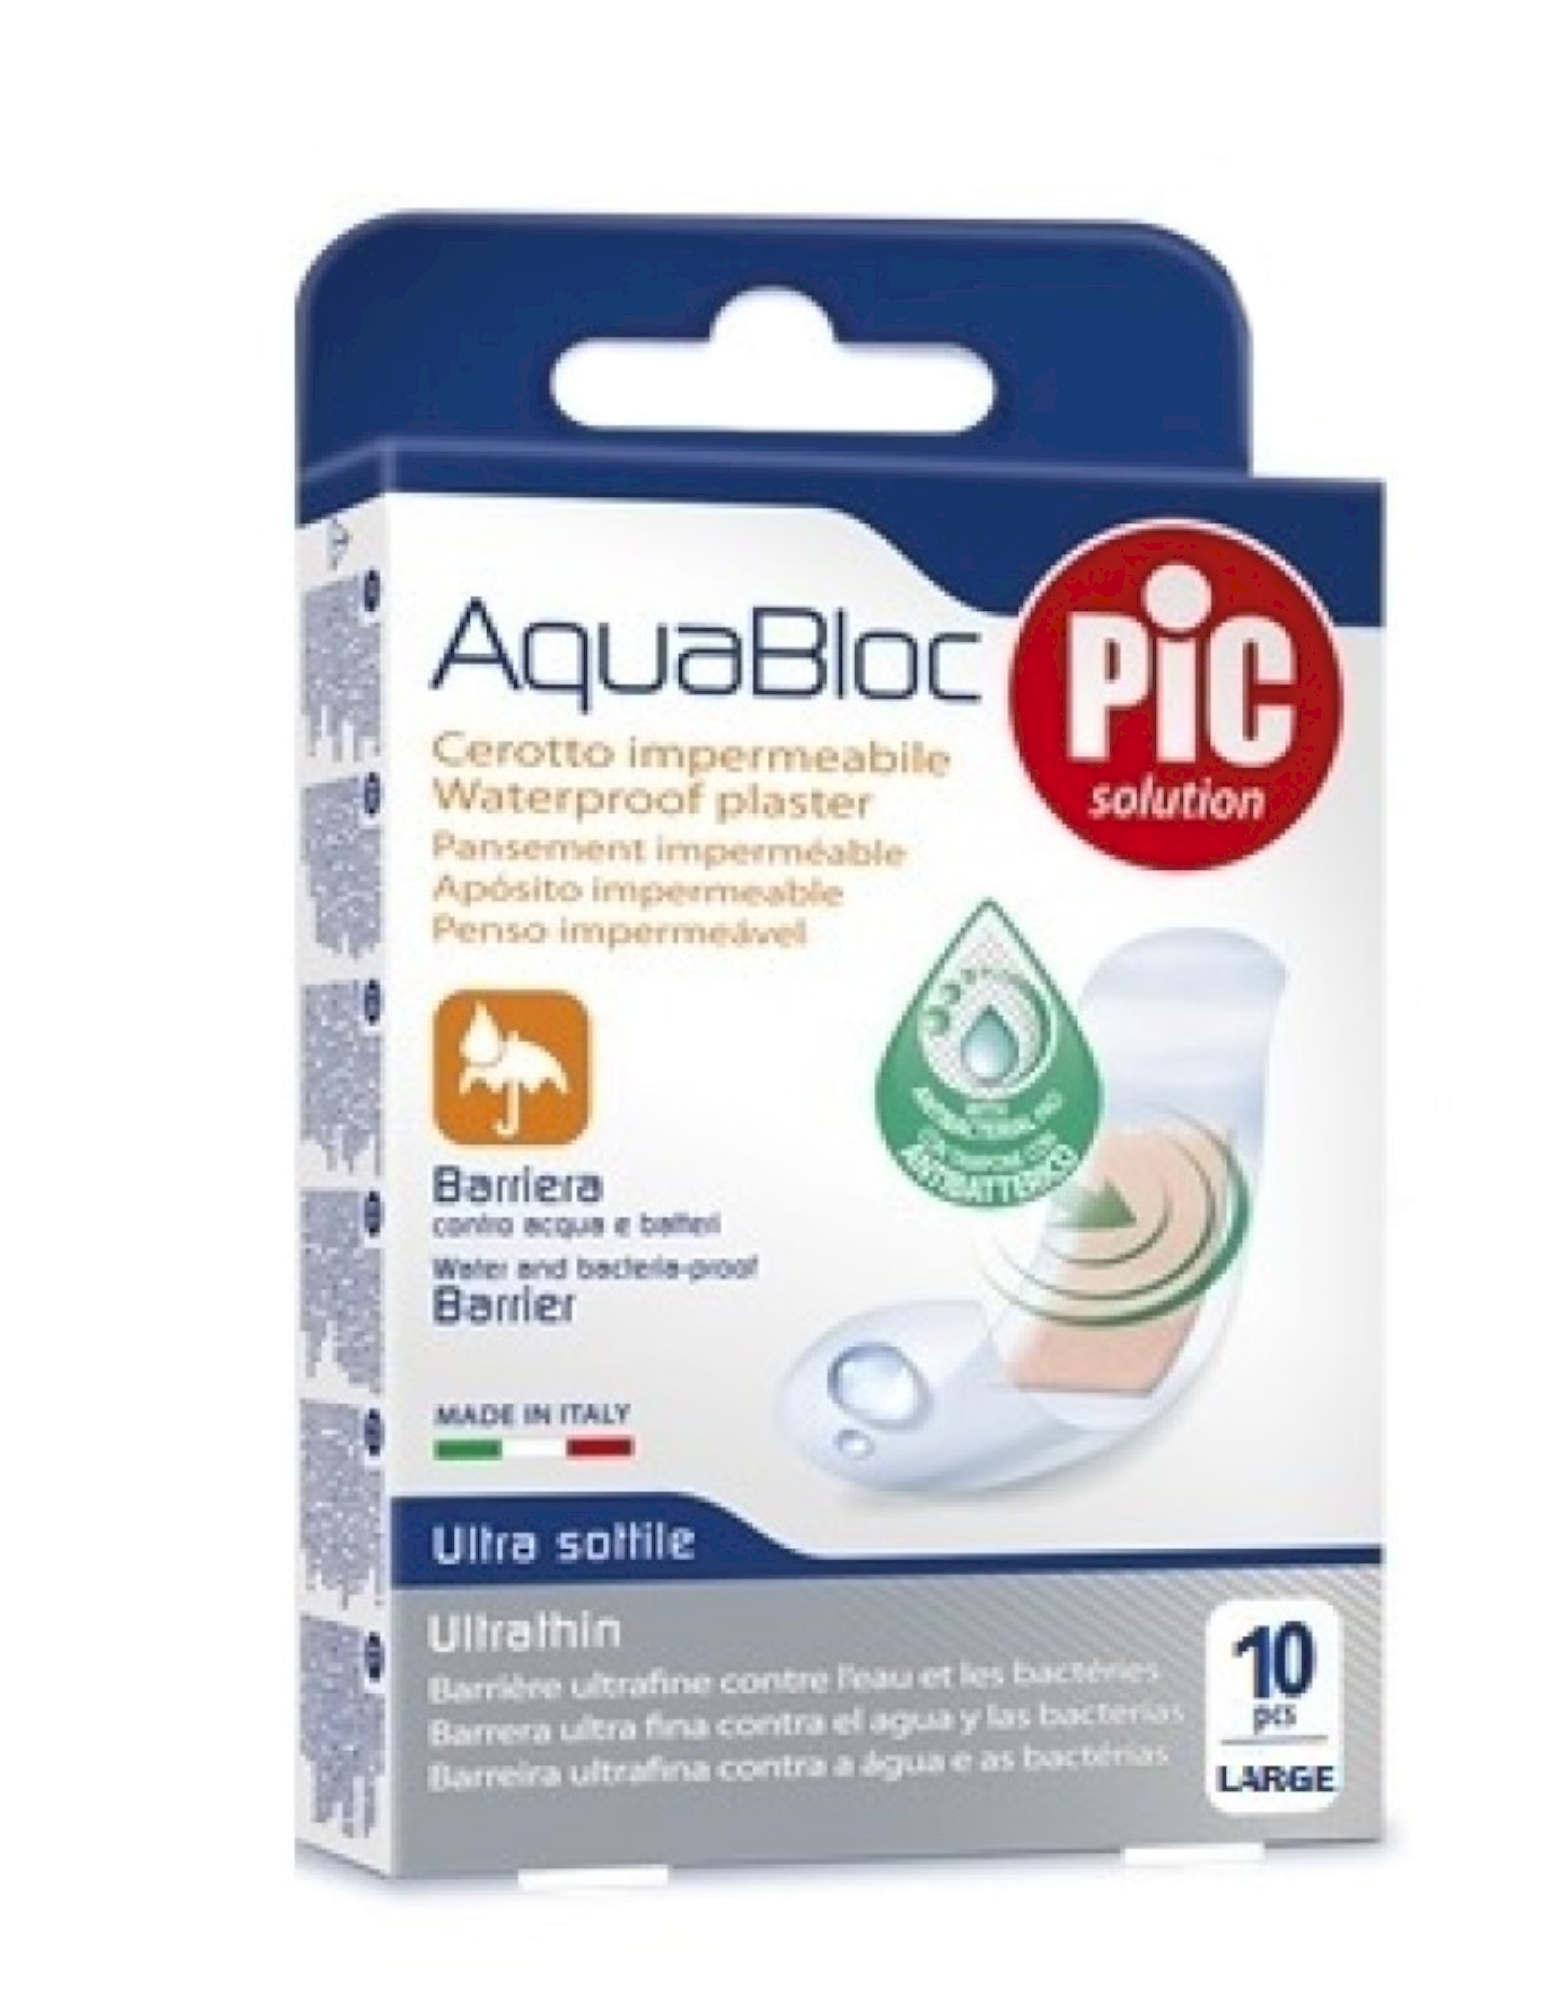 PIC Aqua Bloc Cerotto Impermeabile Large 10pcs Large